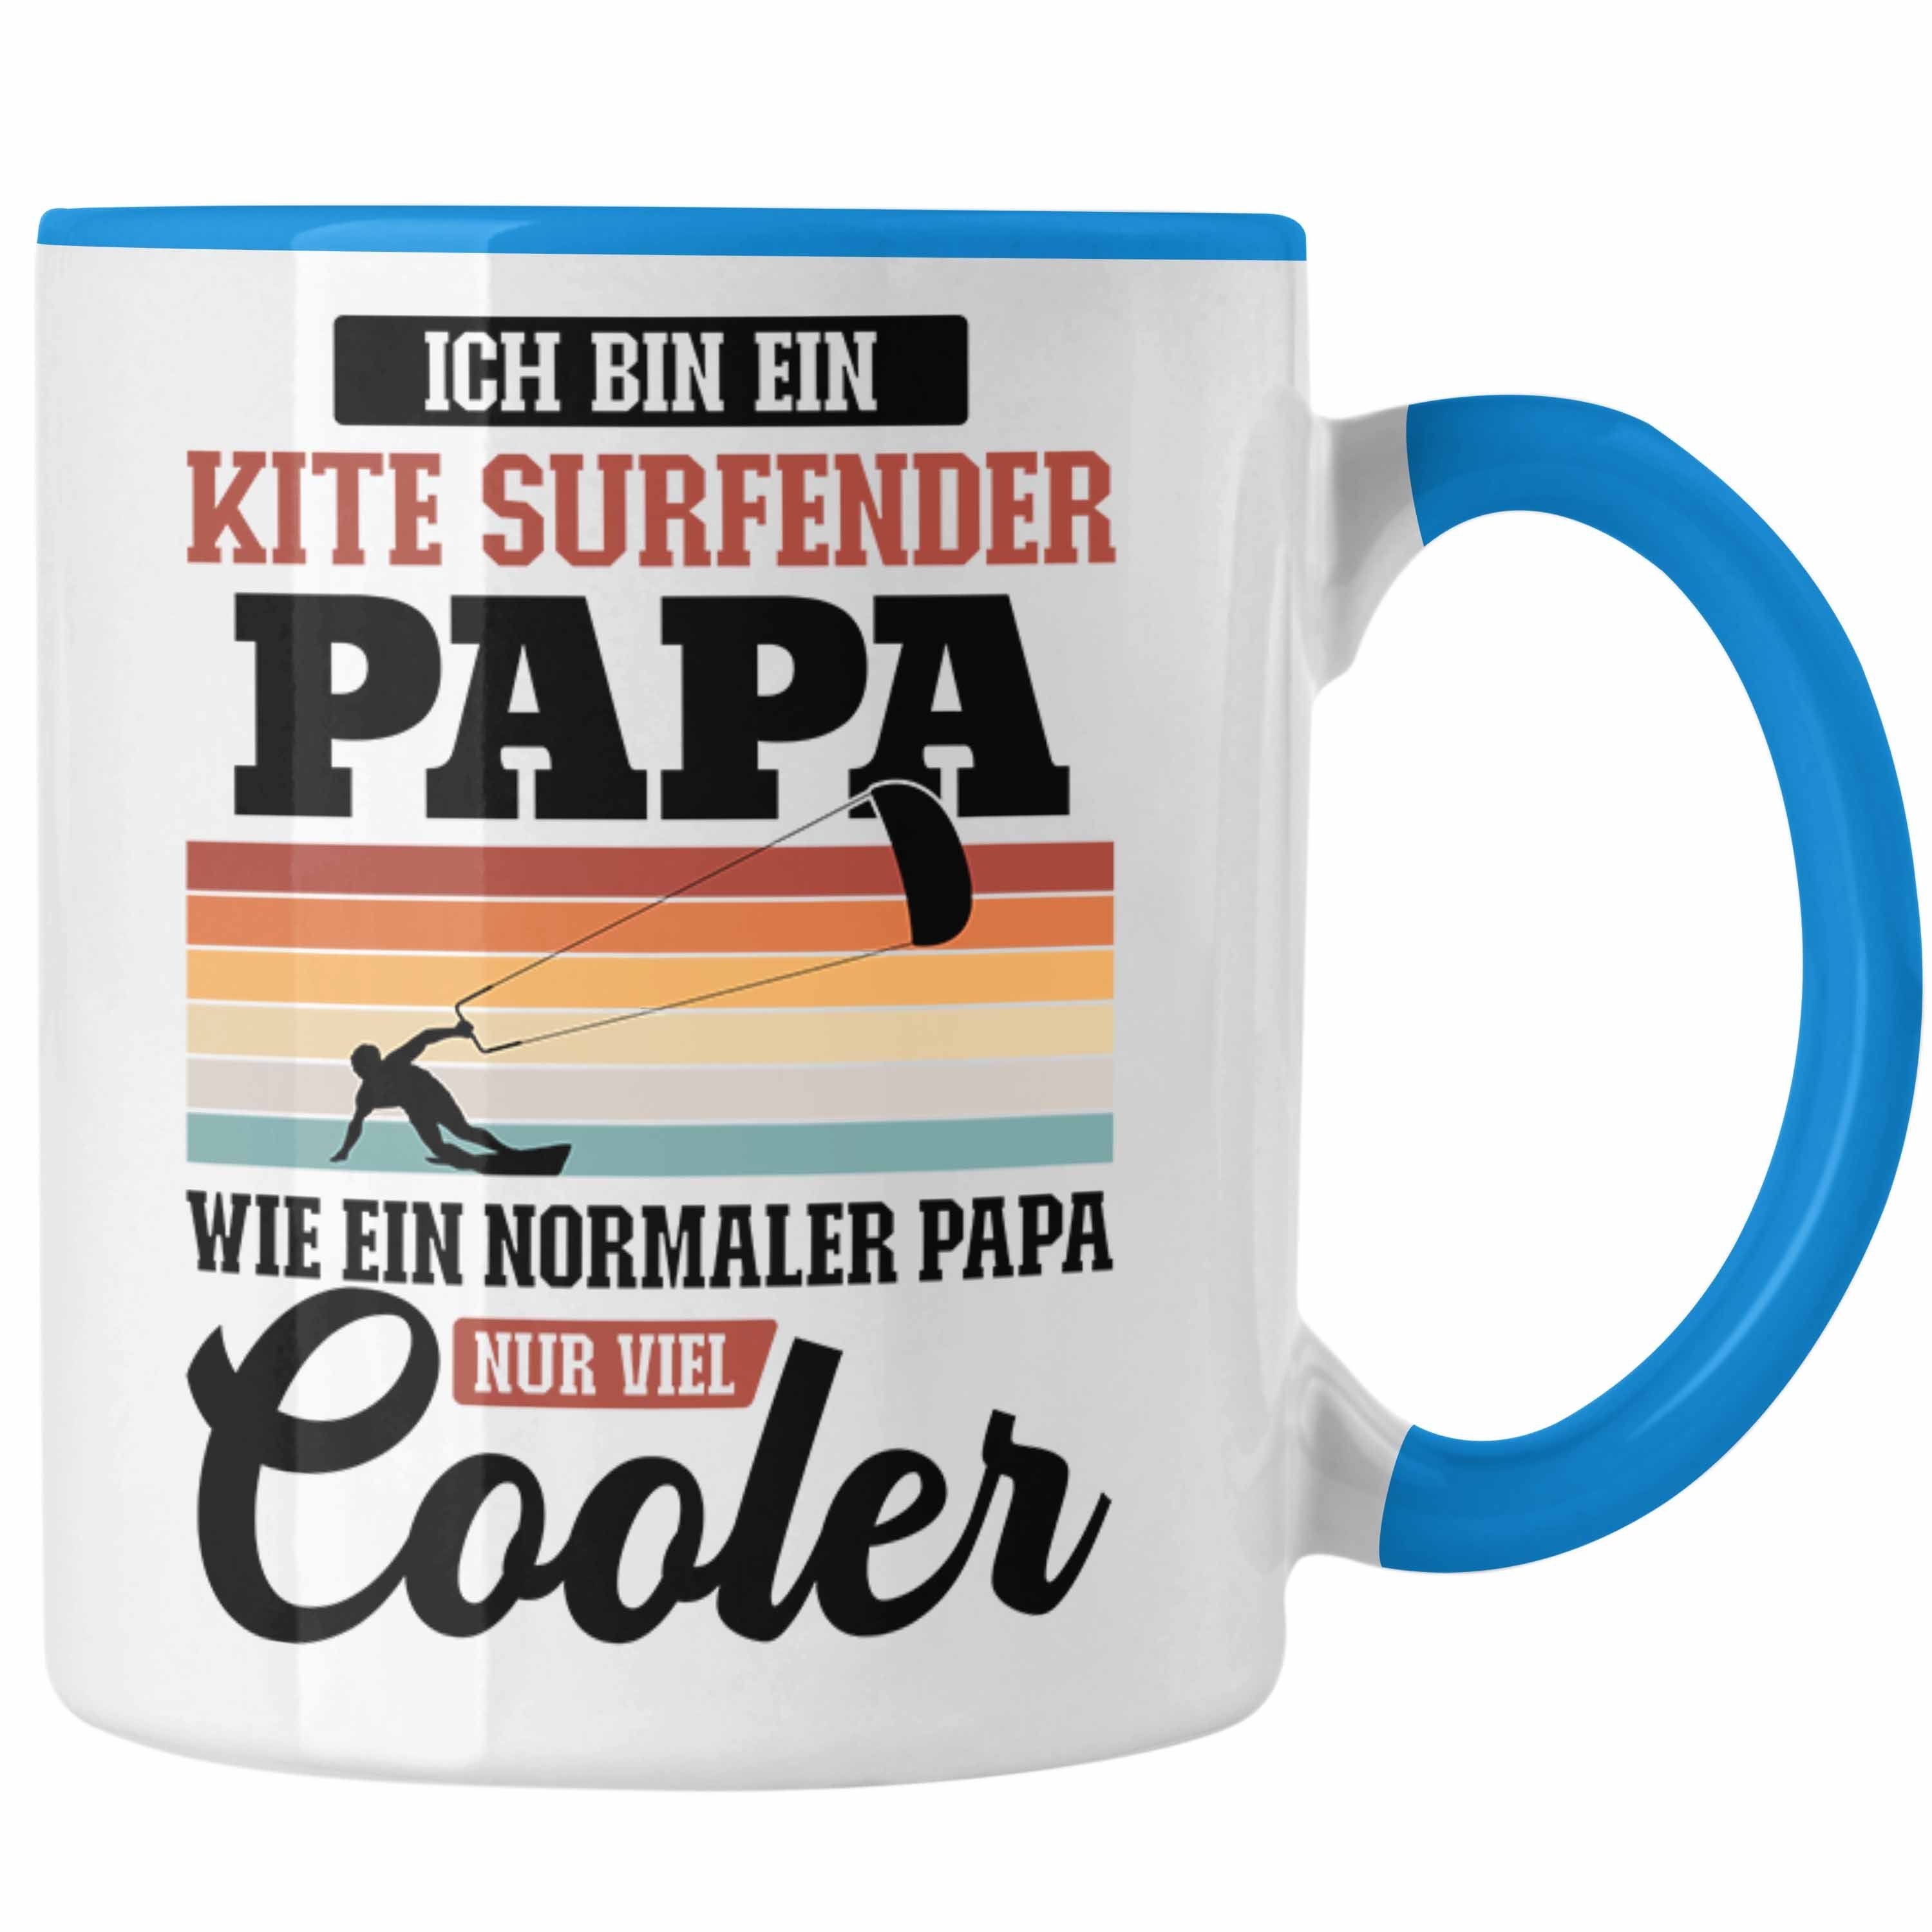 Trendation Tasse Trendation - Kitesurf Vater Kitesurfing Geschenk Blau Tasse Surfender Kite Papa Papa Kitesurfen